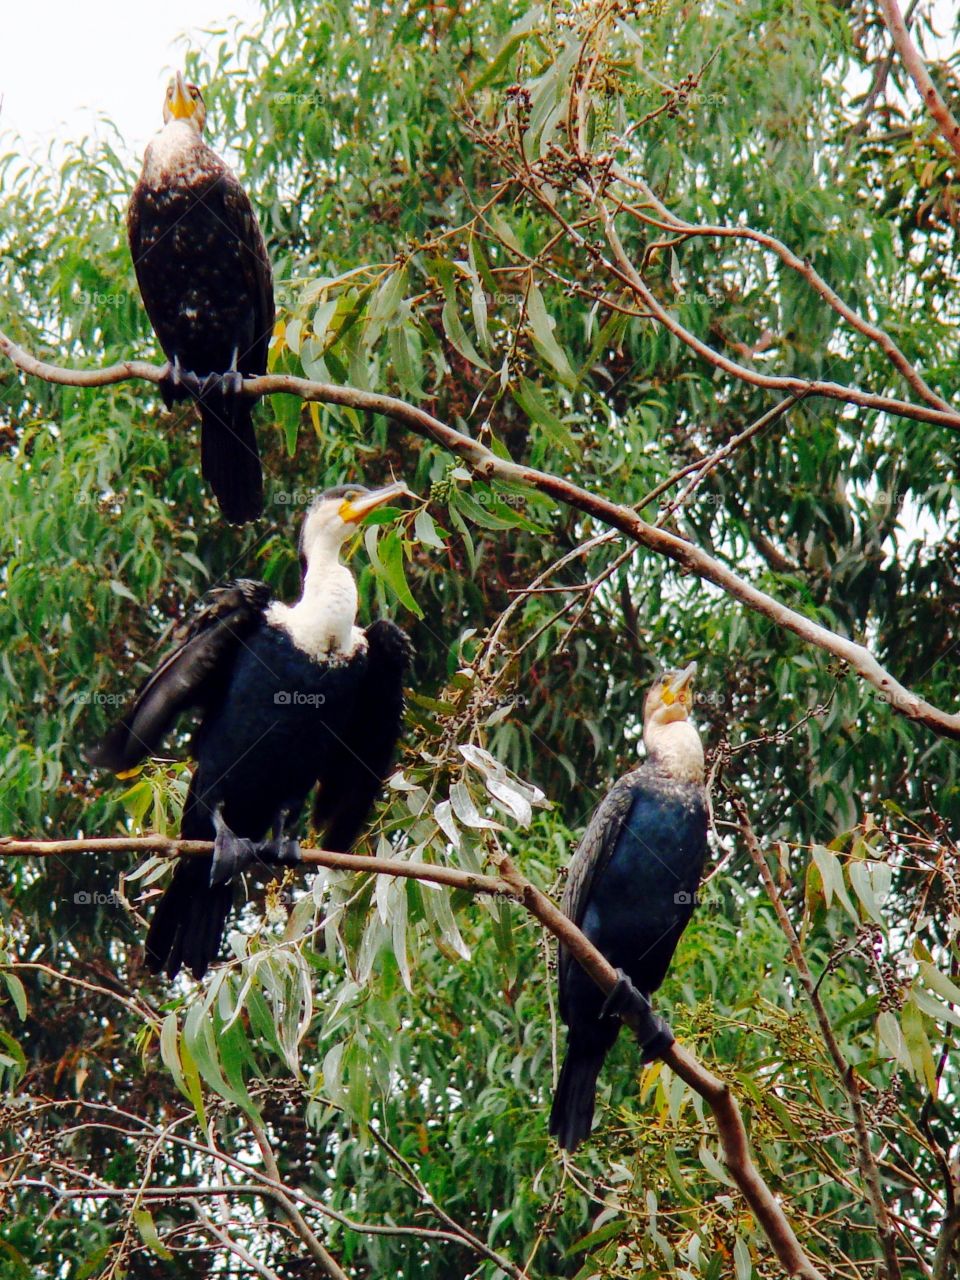 Palm nut vulture
